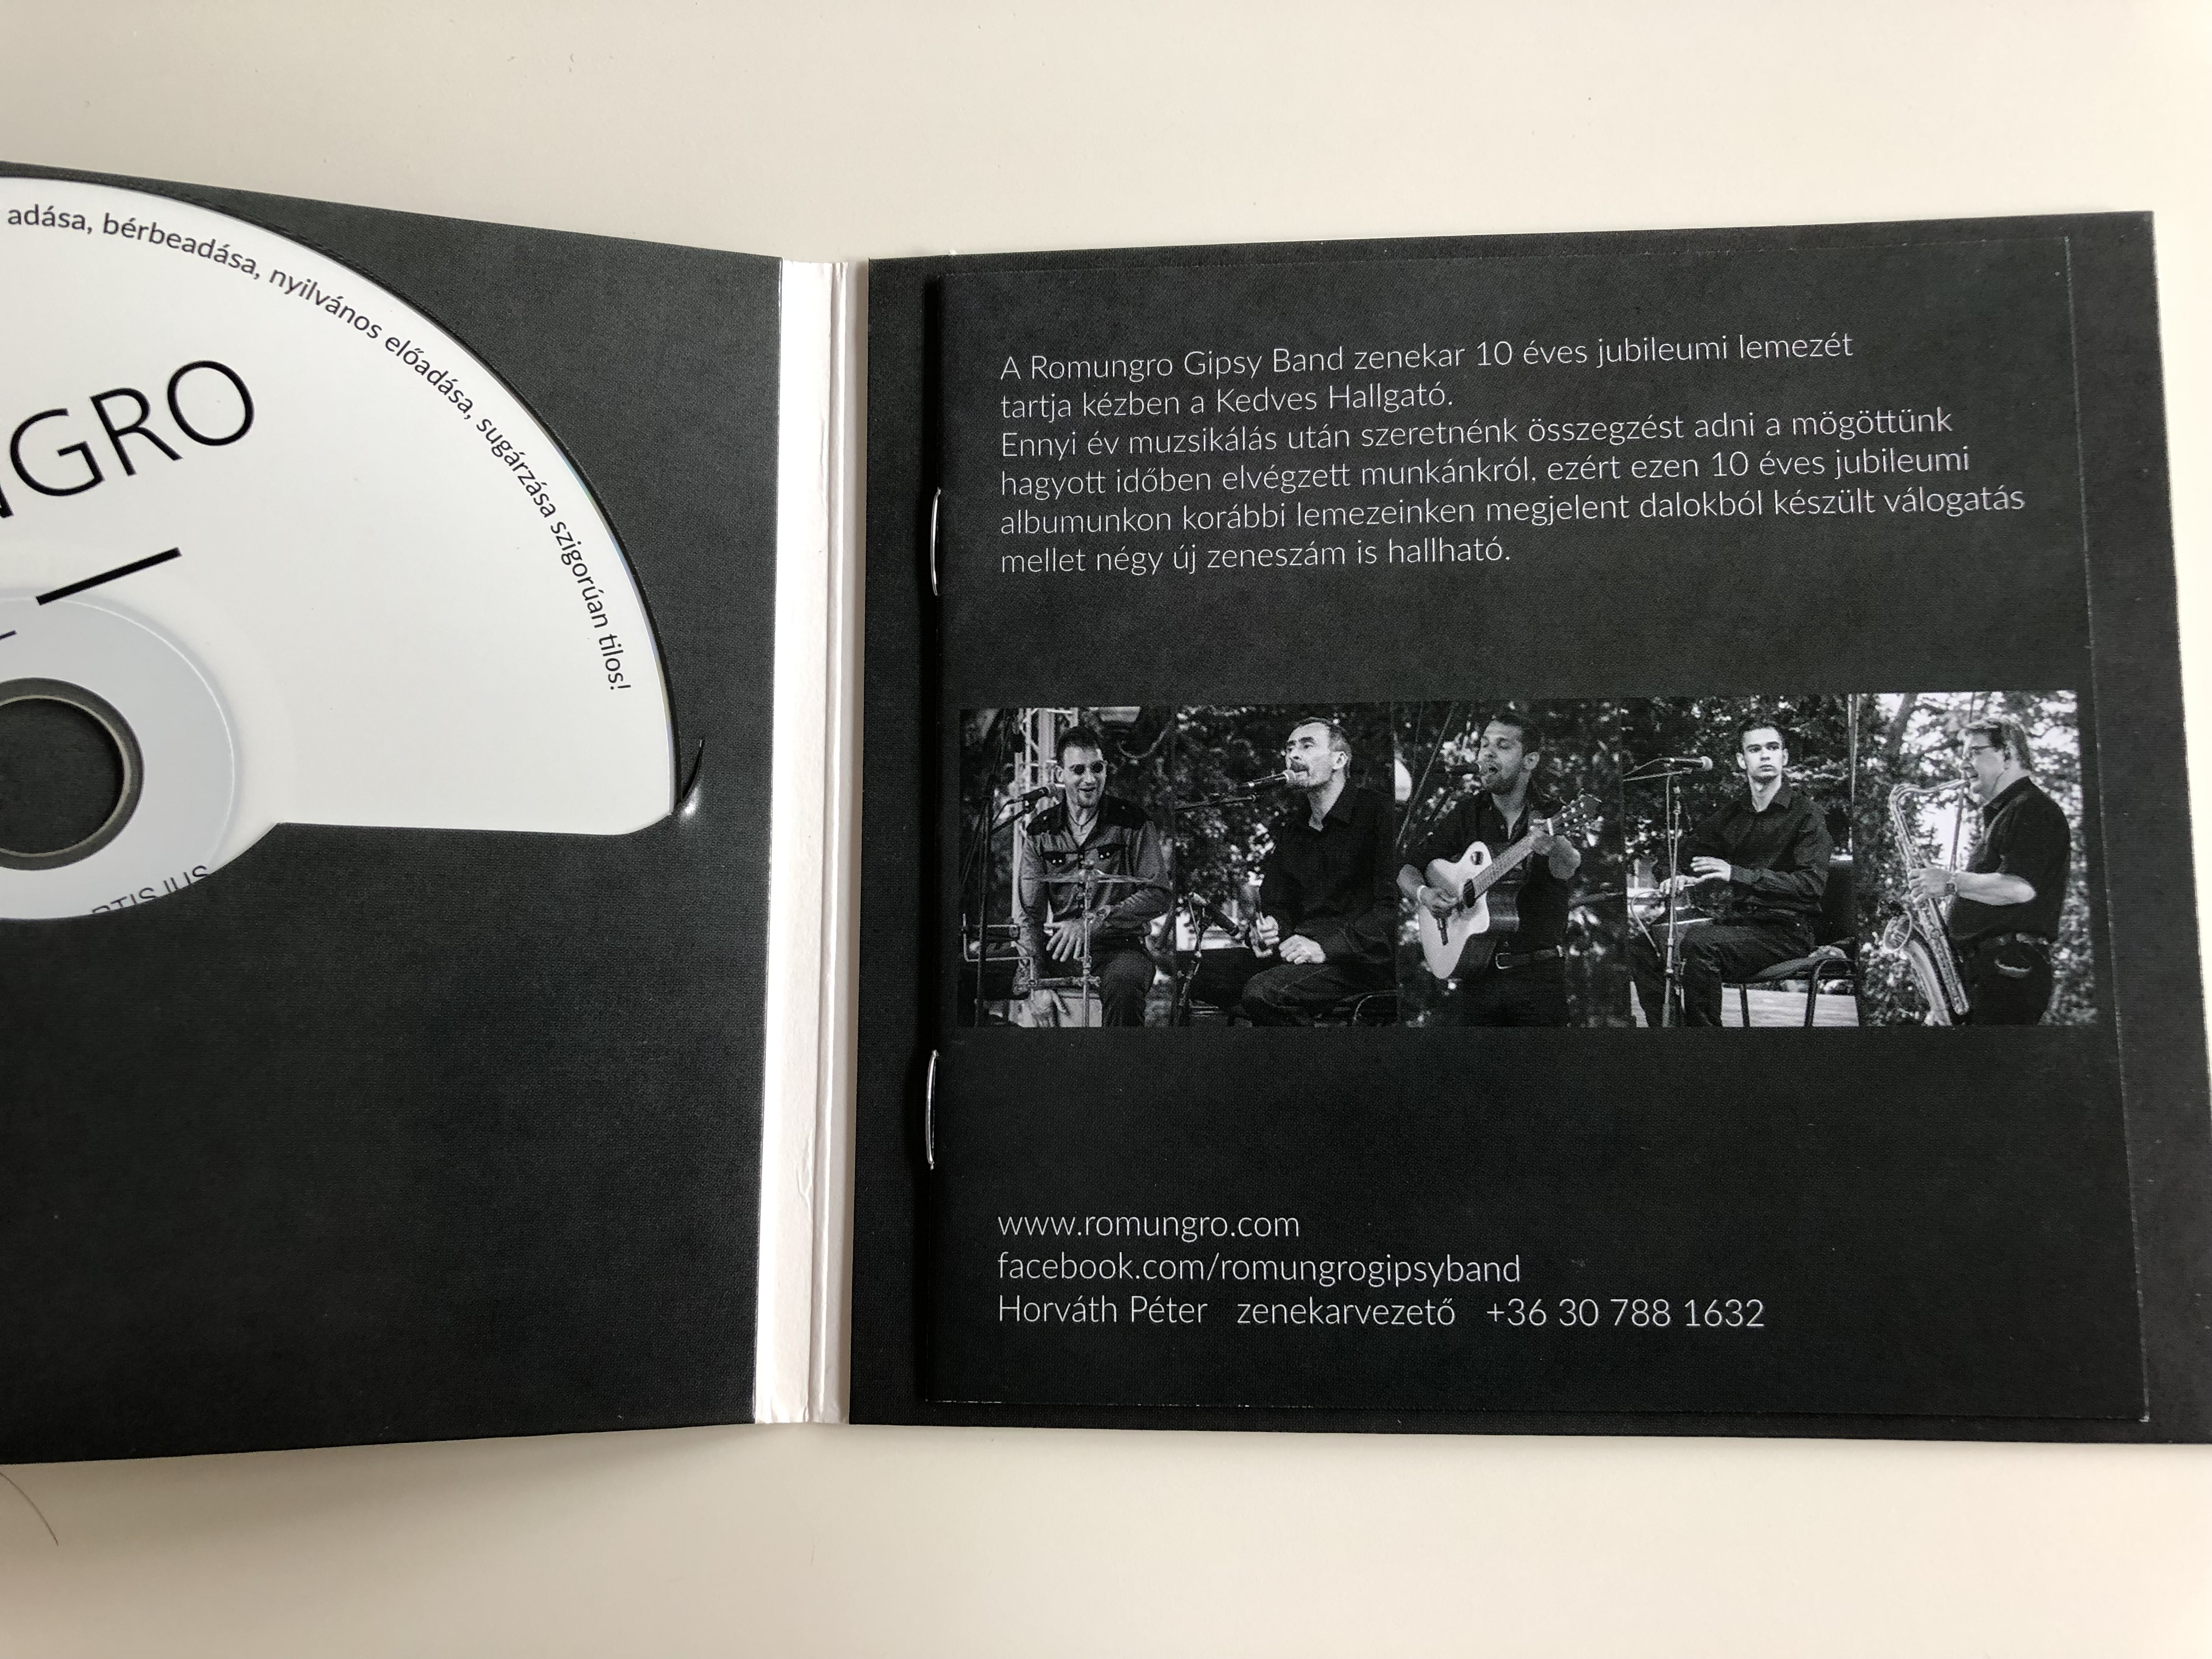 romungro-t-z-audio-cd-2018-romungro-gypsy-band-10th-year-anniversary-cd-gryllus-2-.jpg